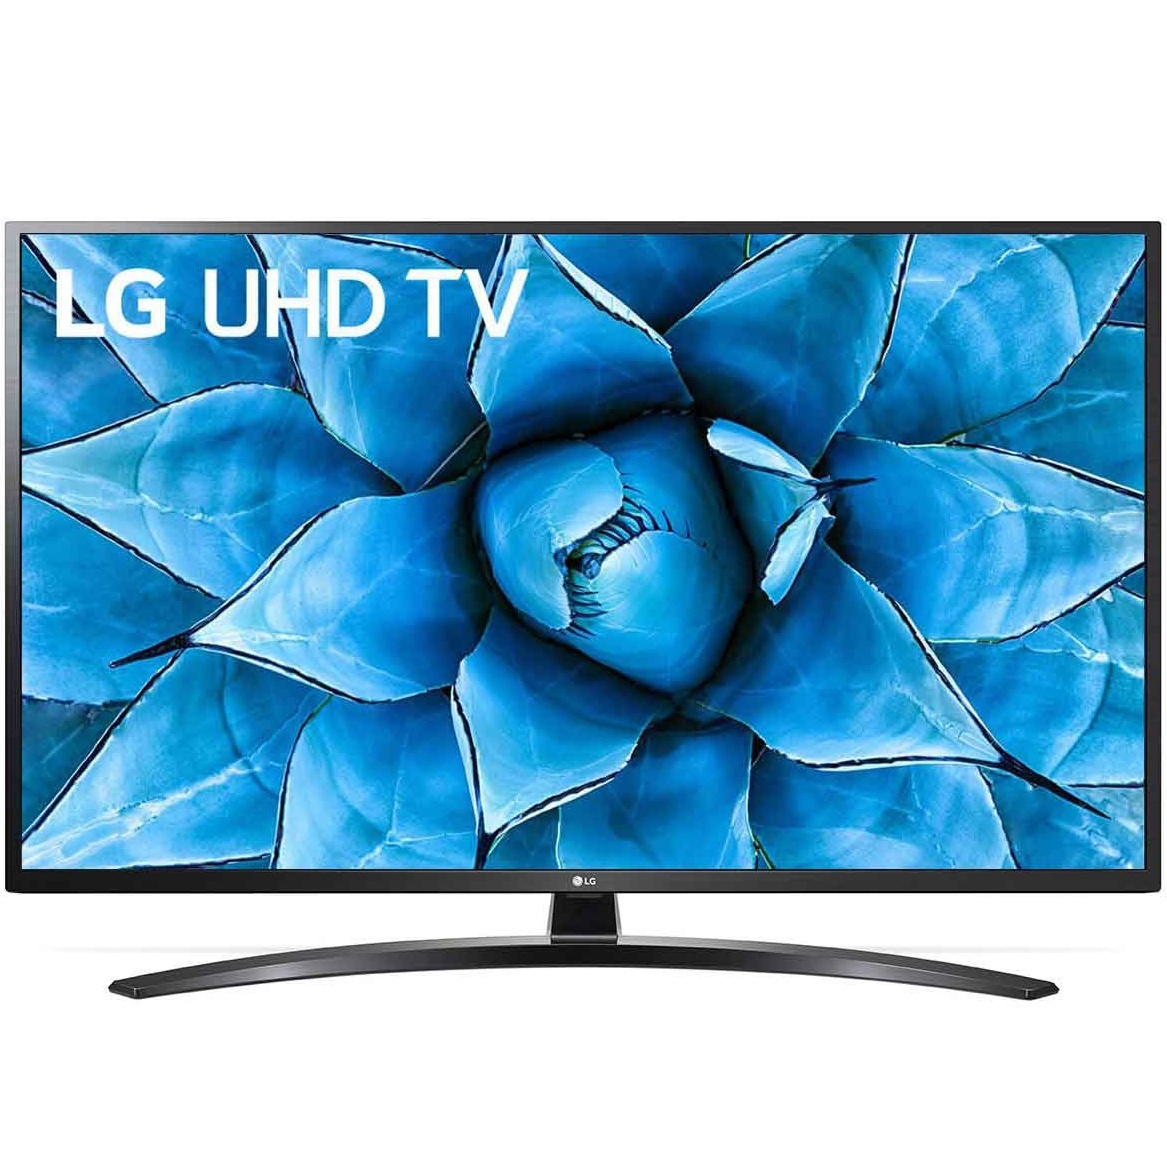 LG UN72 49 inch 4K Smart UHD TV IPS 49UN7290PTF chính hãng